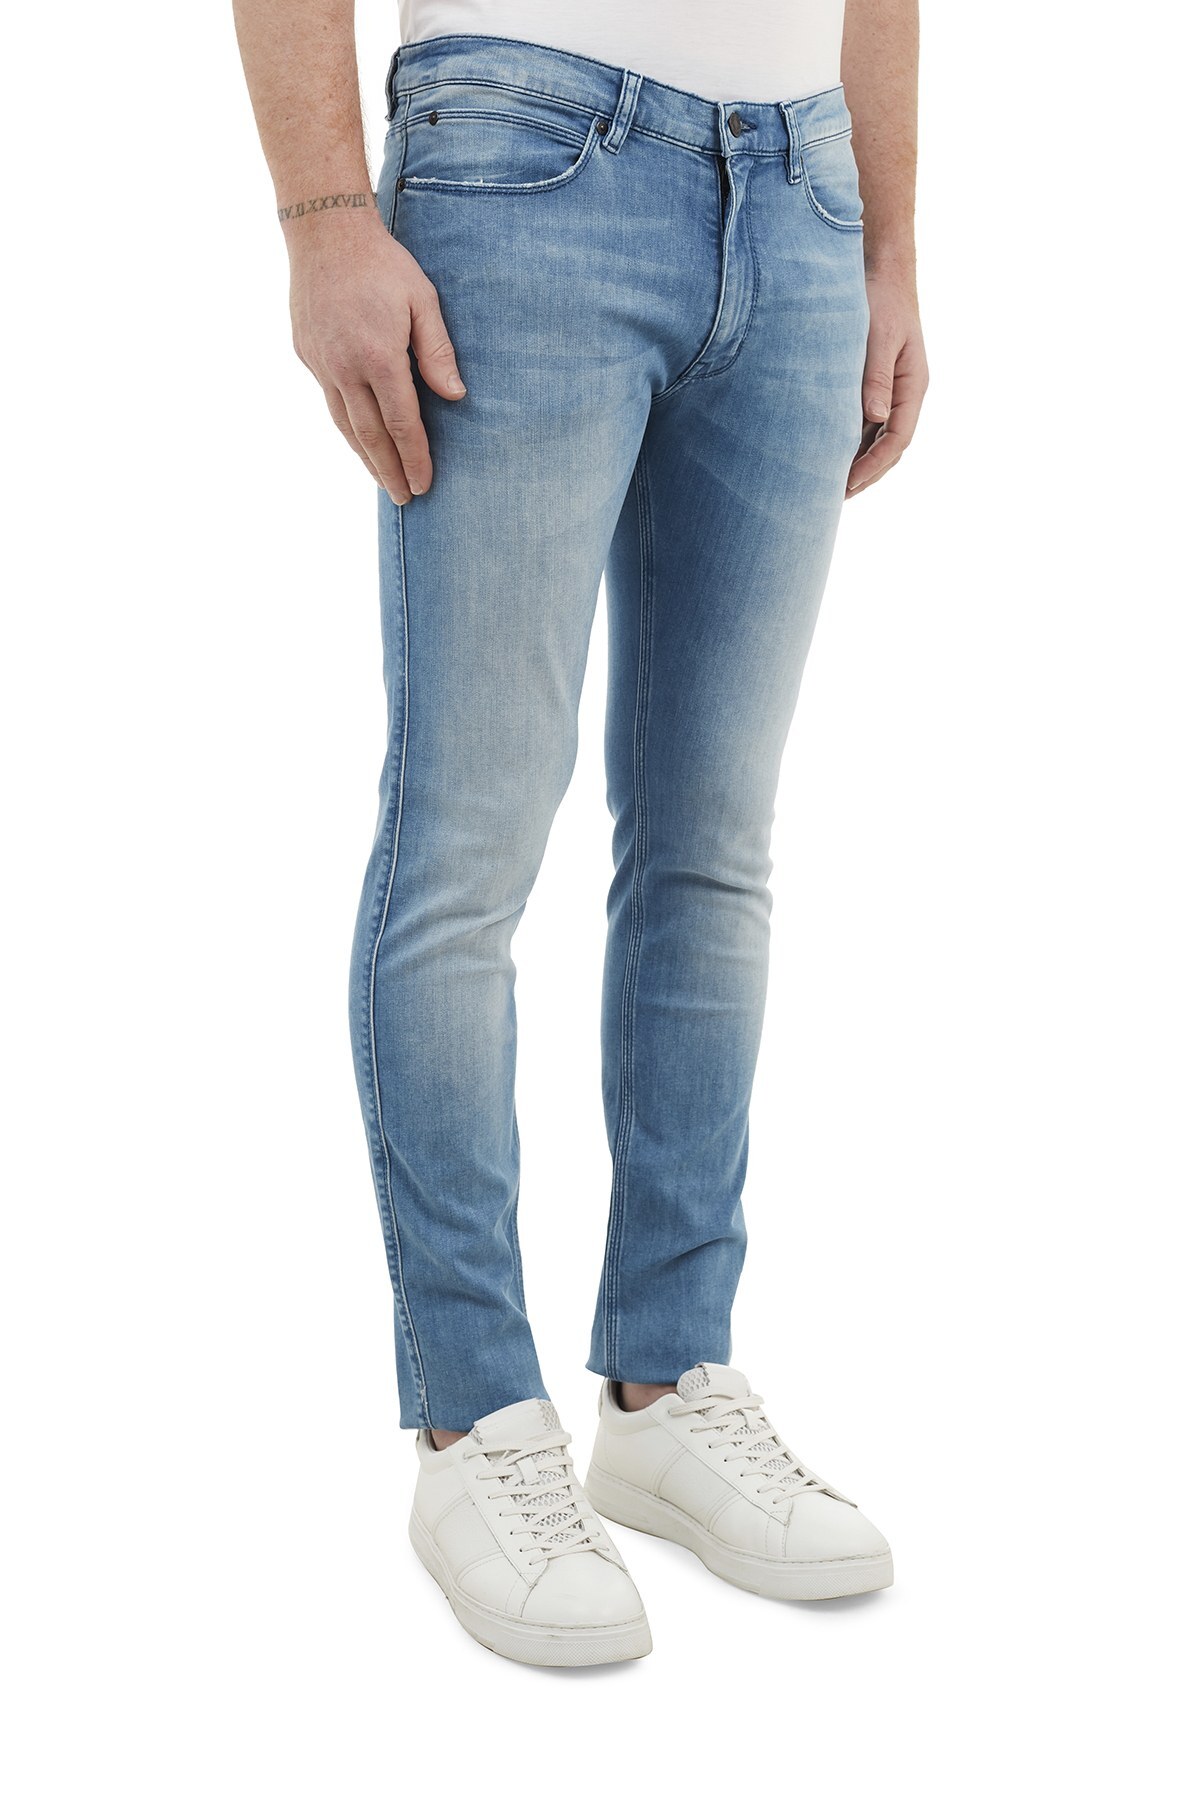 Hugo Boss Slim Fit Pamuklu Jeans Erkek Kot Pantolon 50446965 455 MAVİ